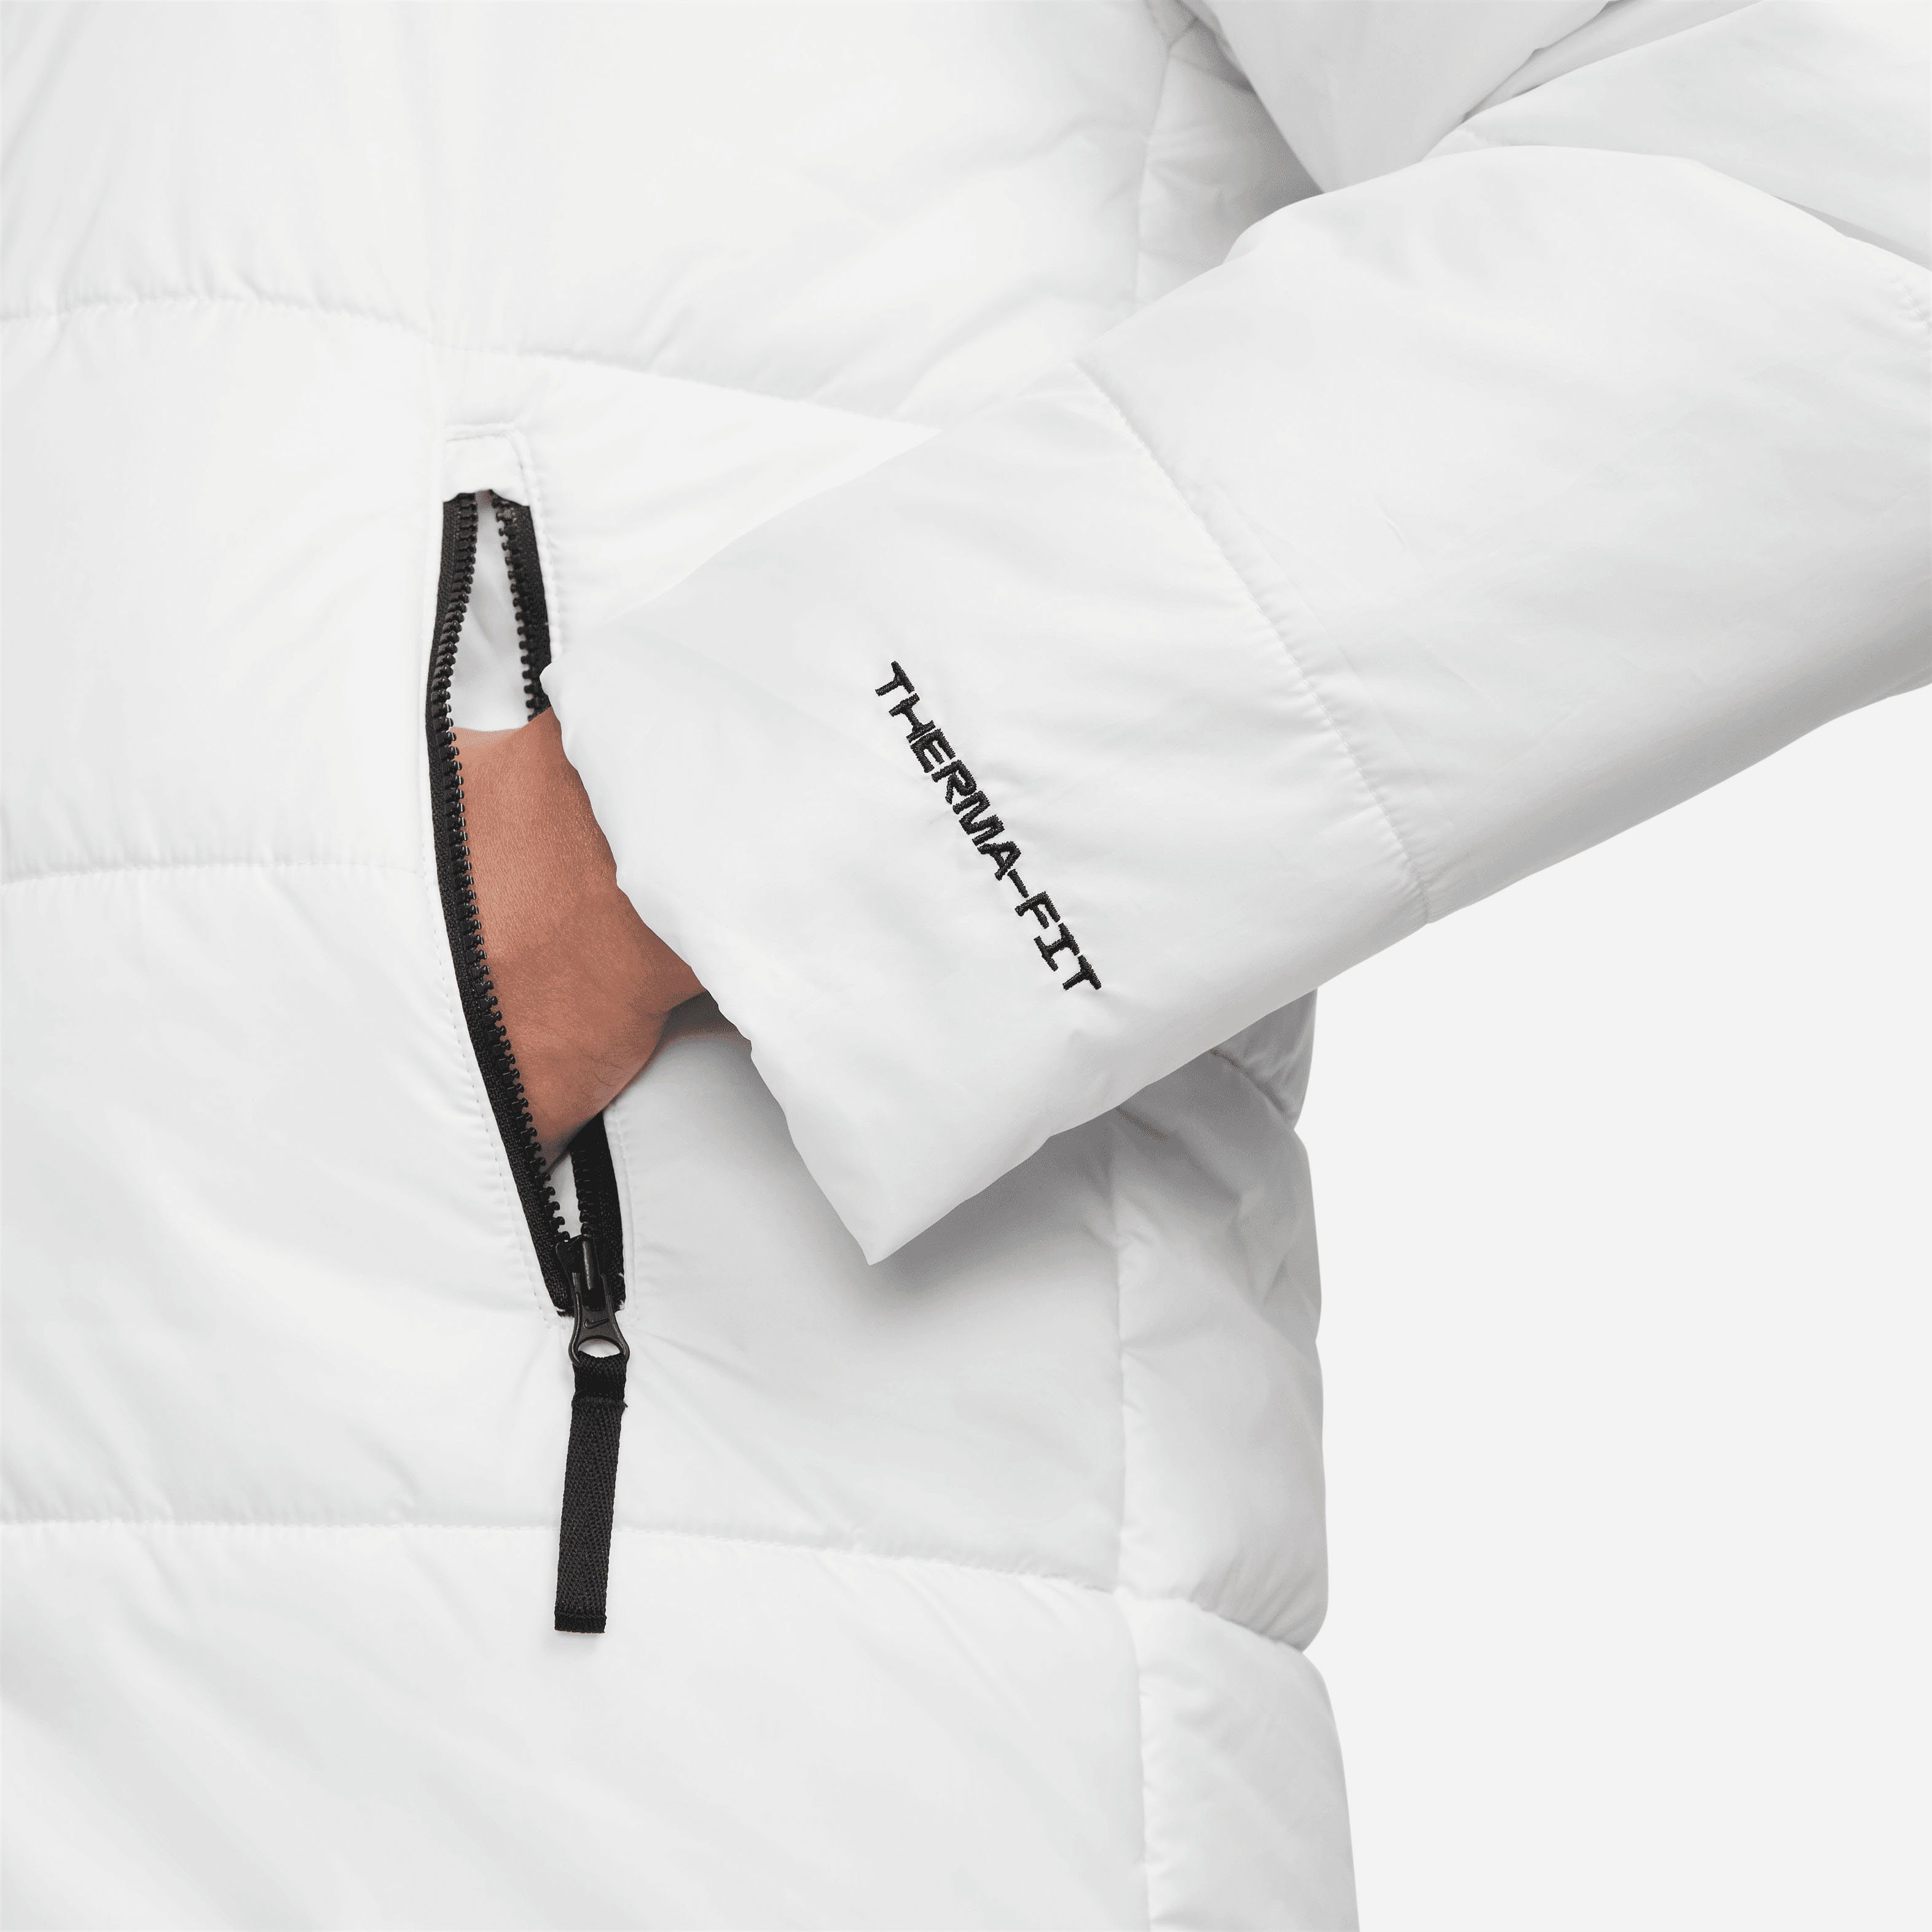 Therma-FIT Women's WHITE/BLACK/BLACK Repel Parka Steppmantel SUMMIT Hooded Nike Sportswear